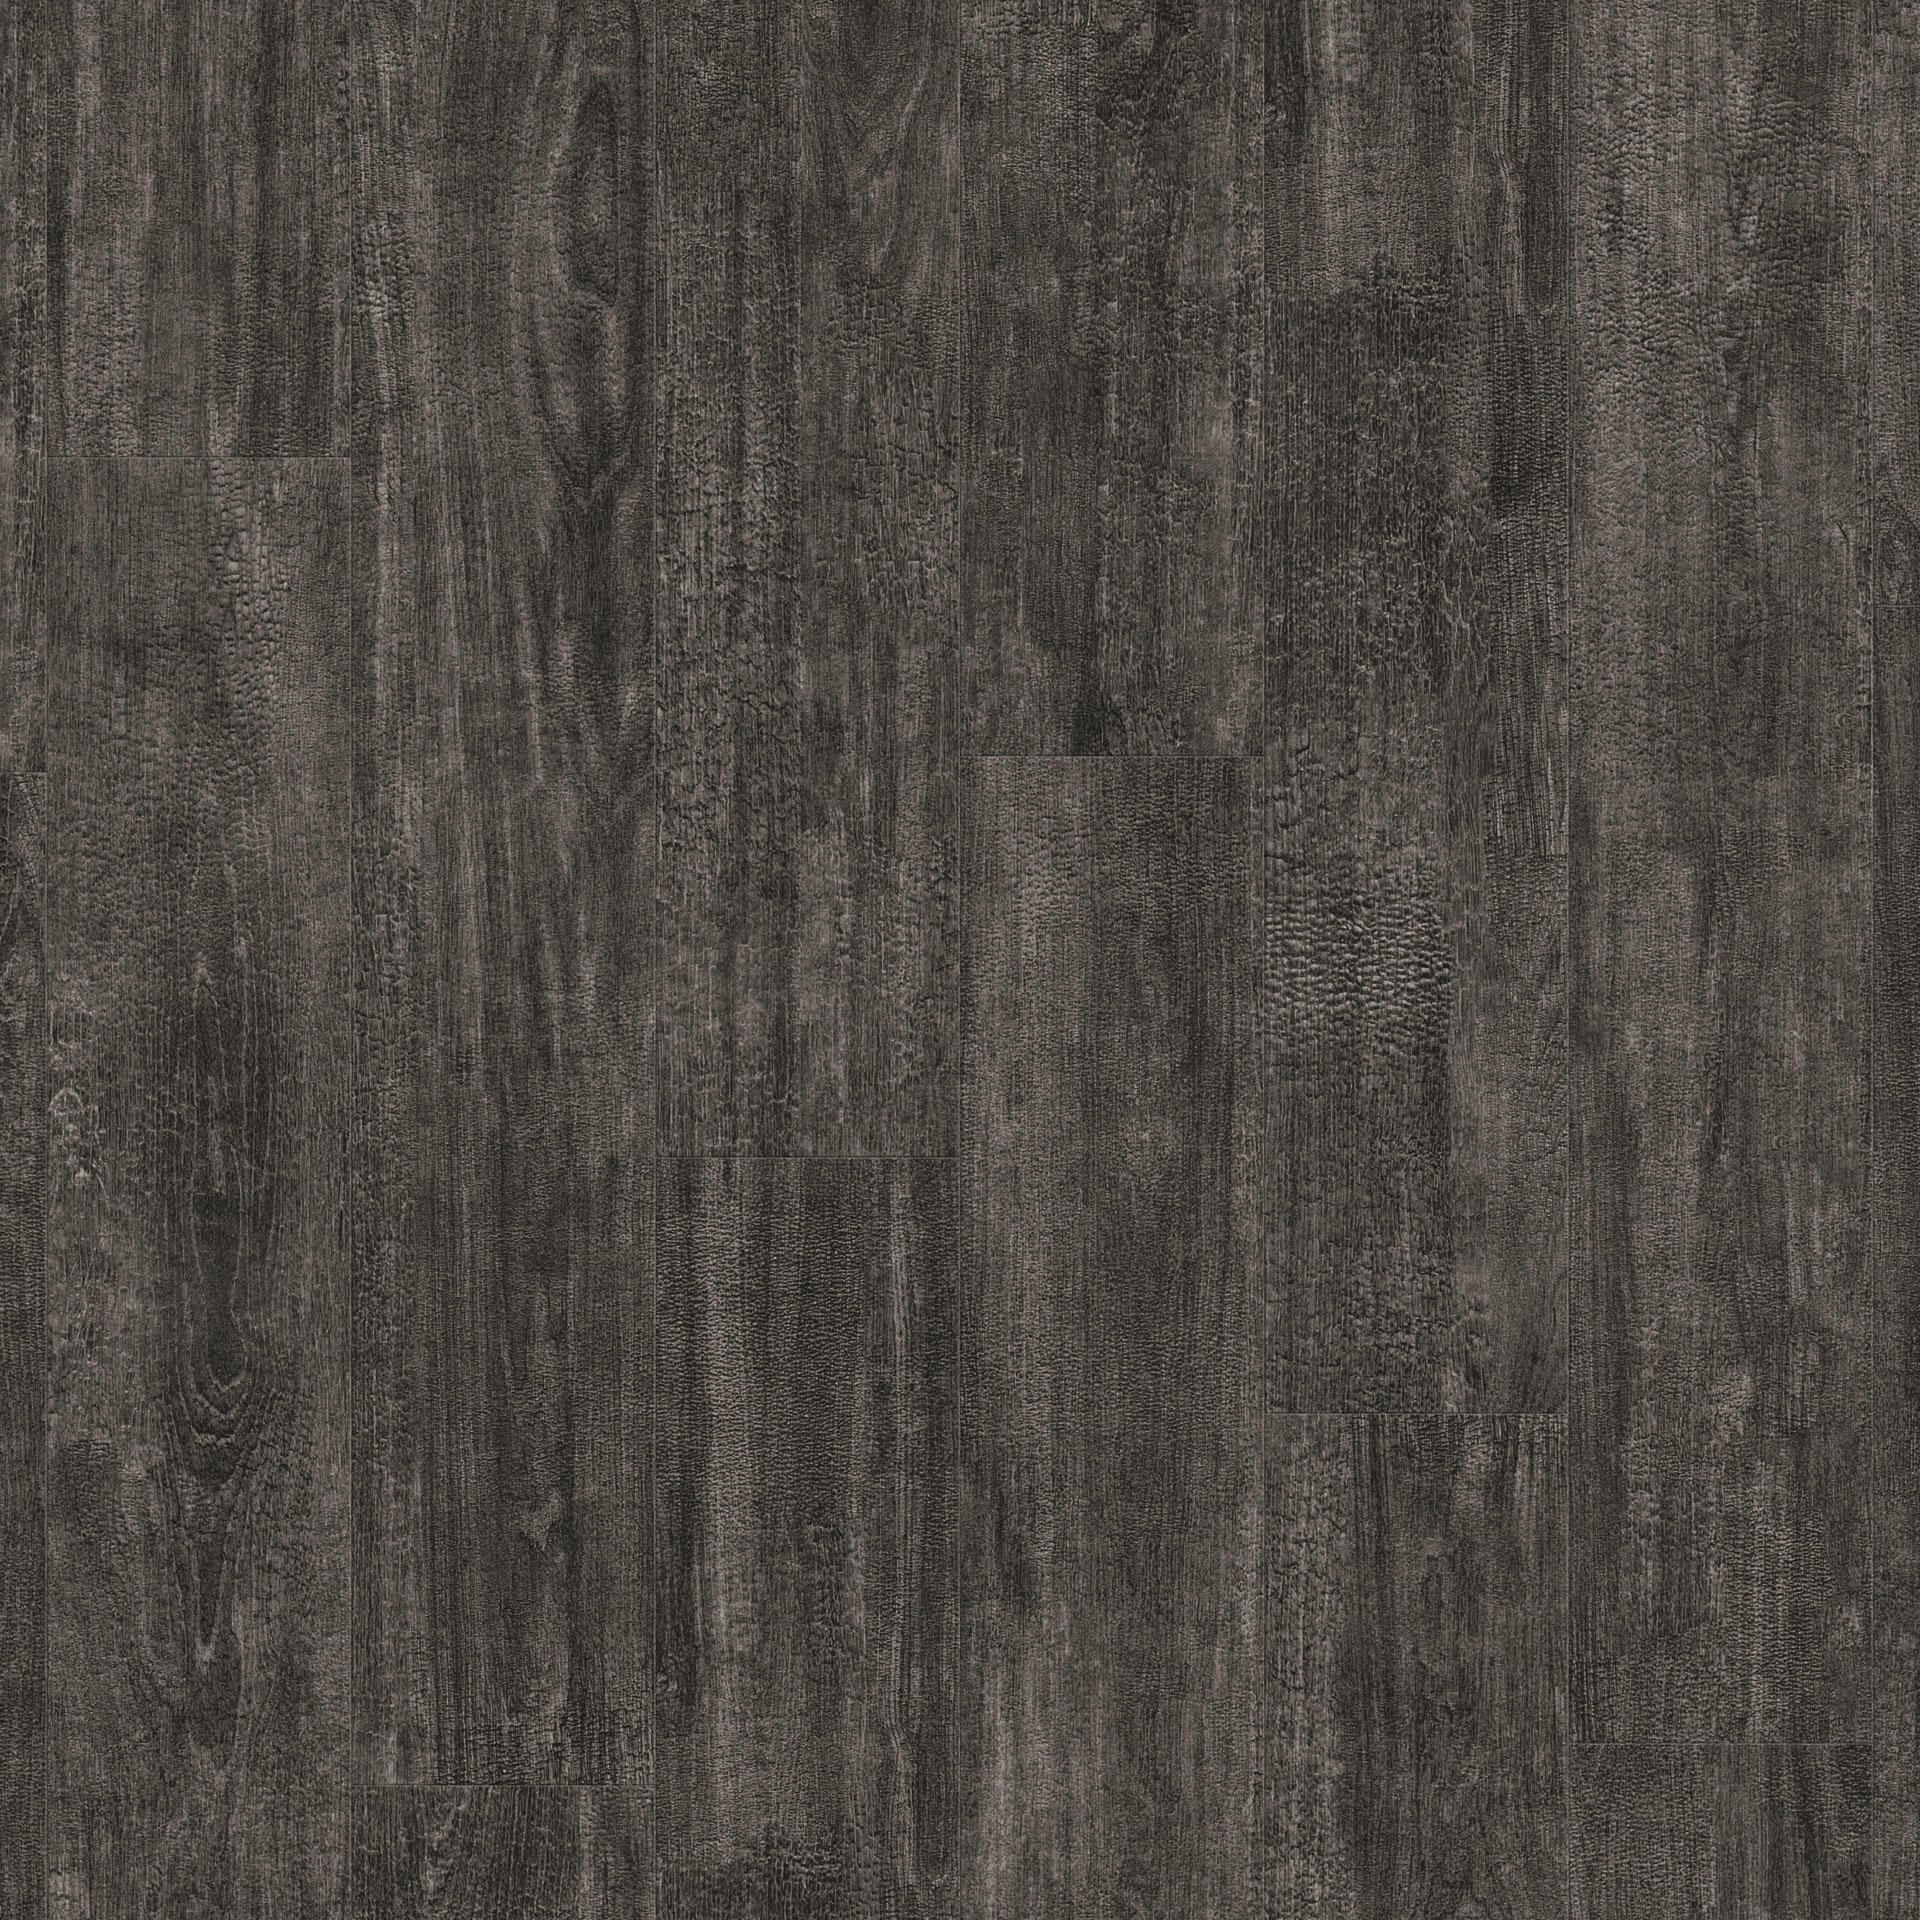 Tarkett iD Inspiration 30 NATURALS Vinylplanke Charred Wood - Black - schwarz 24524053